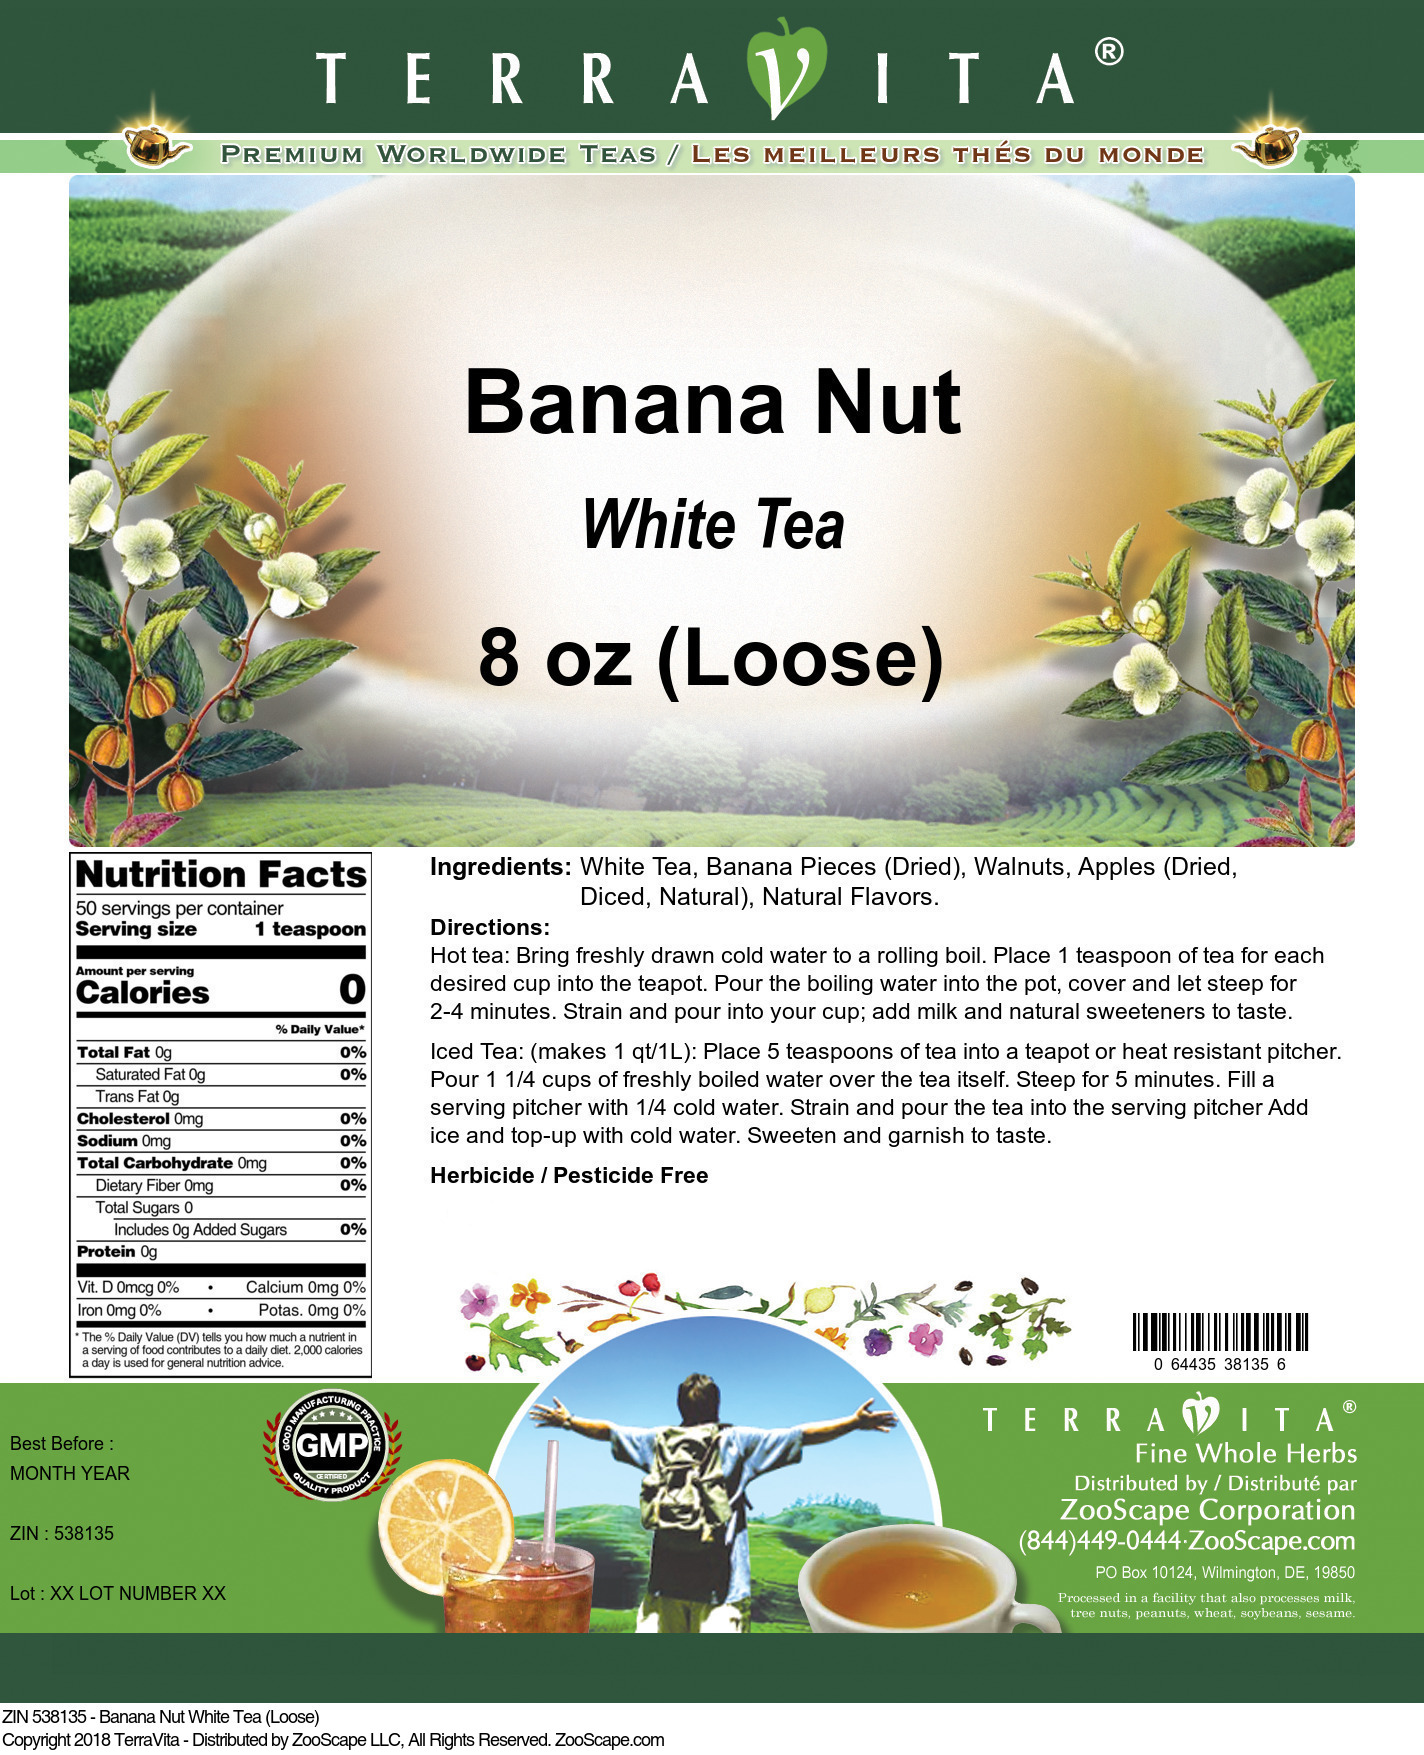 Banana Nut White Tea (Loose) - Label